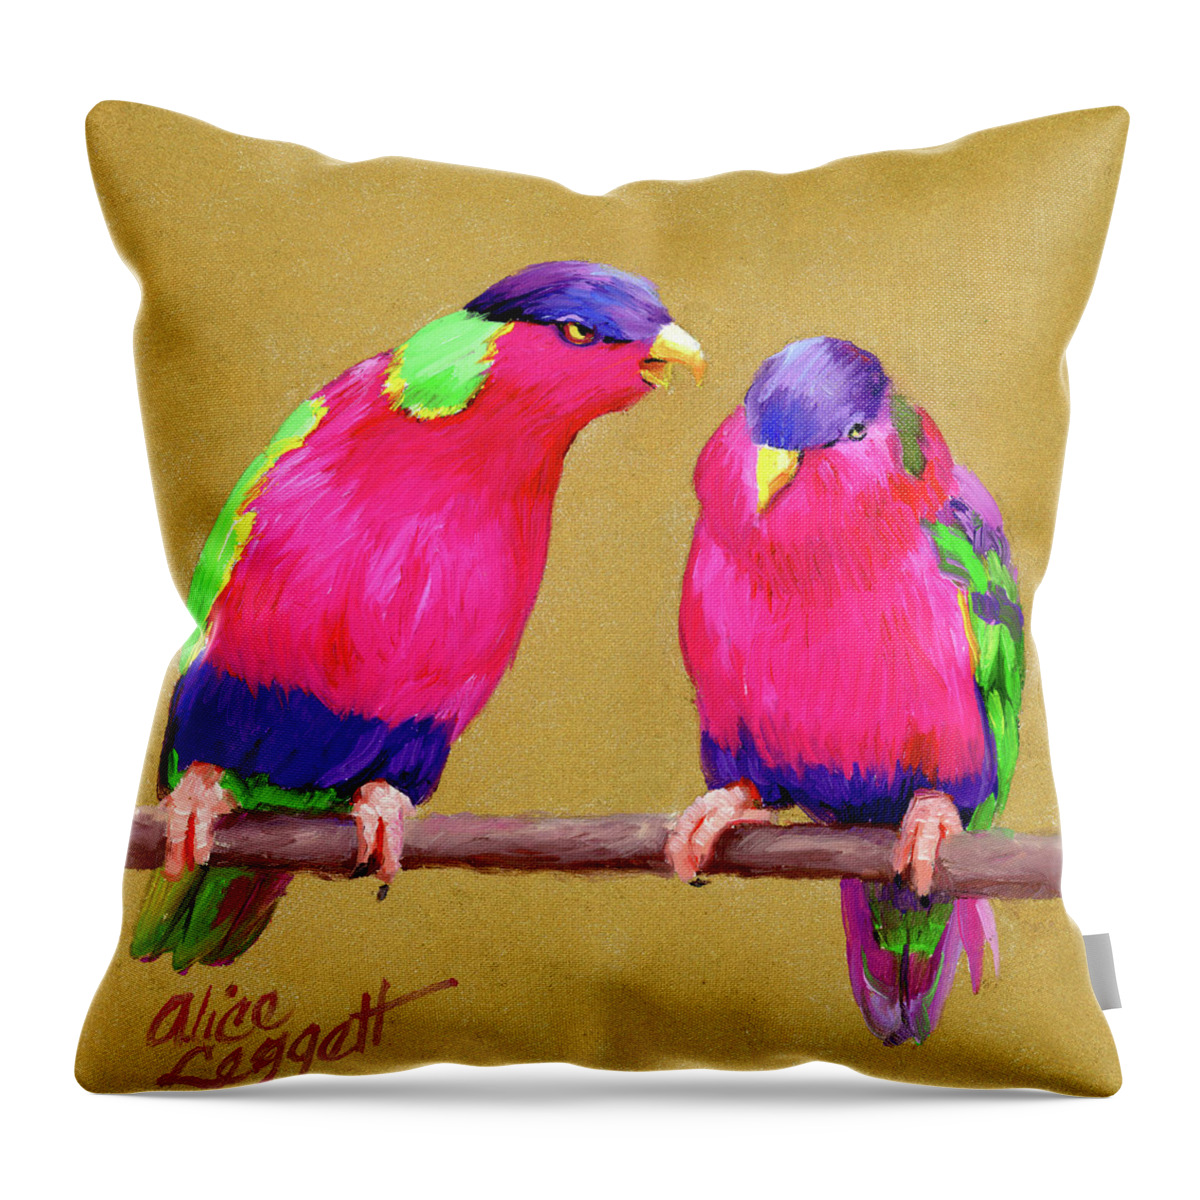 Bird Throw Pillow featuring the painting Bird Blurbs by Alice Leggett